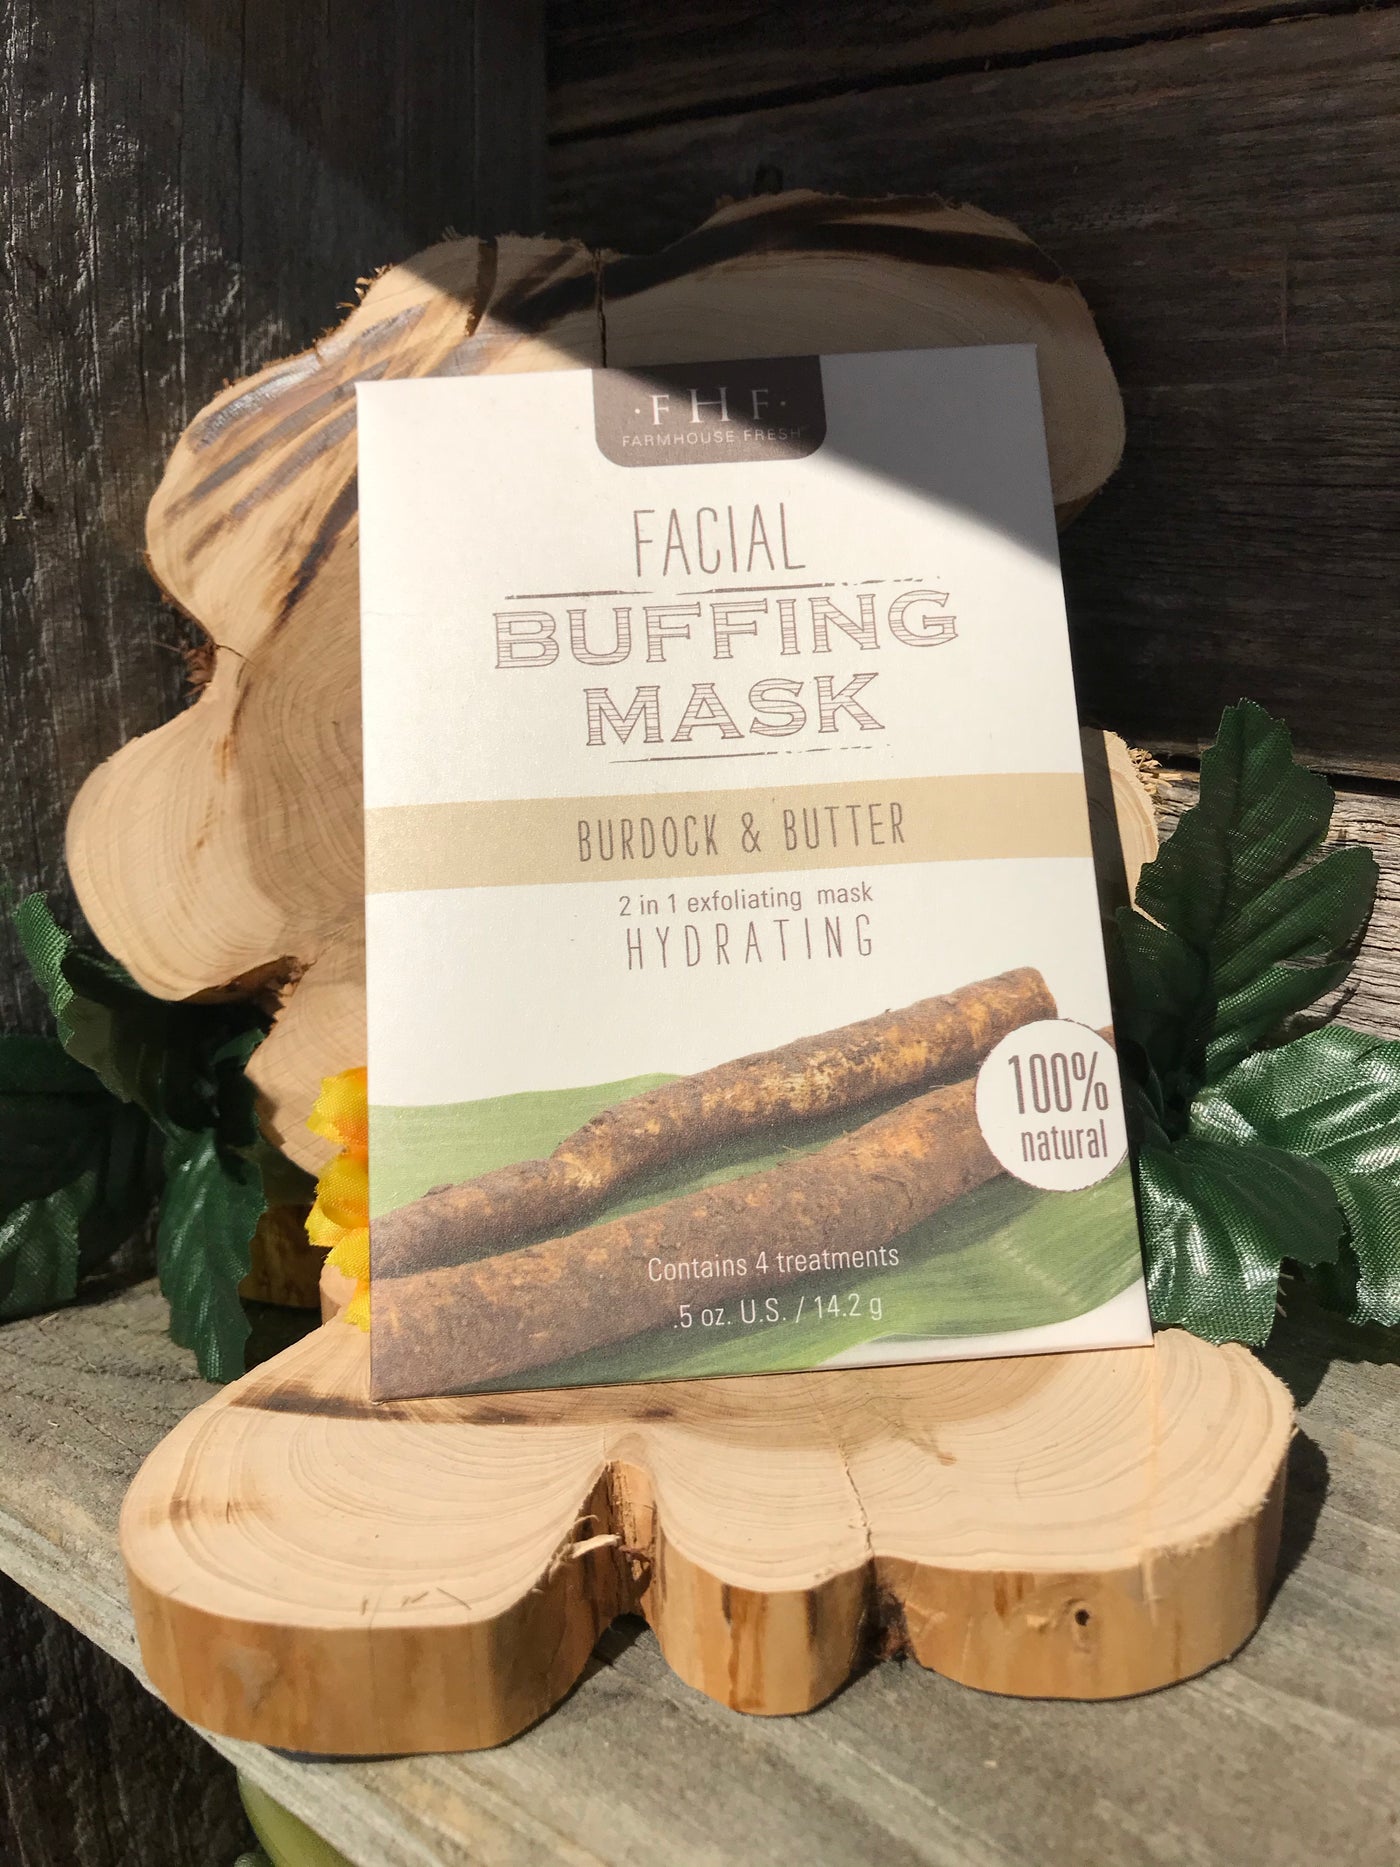 Facial Buffering Masks